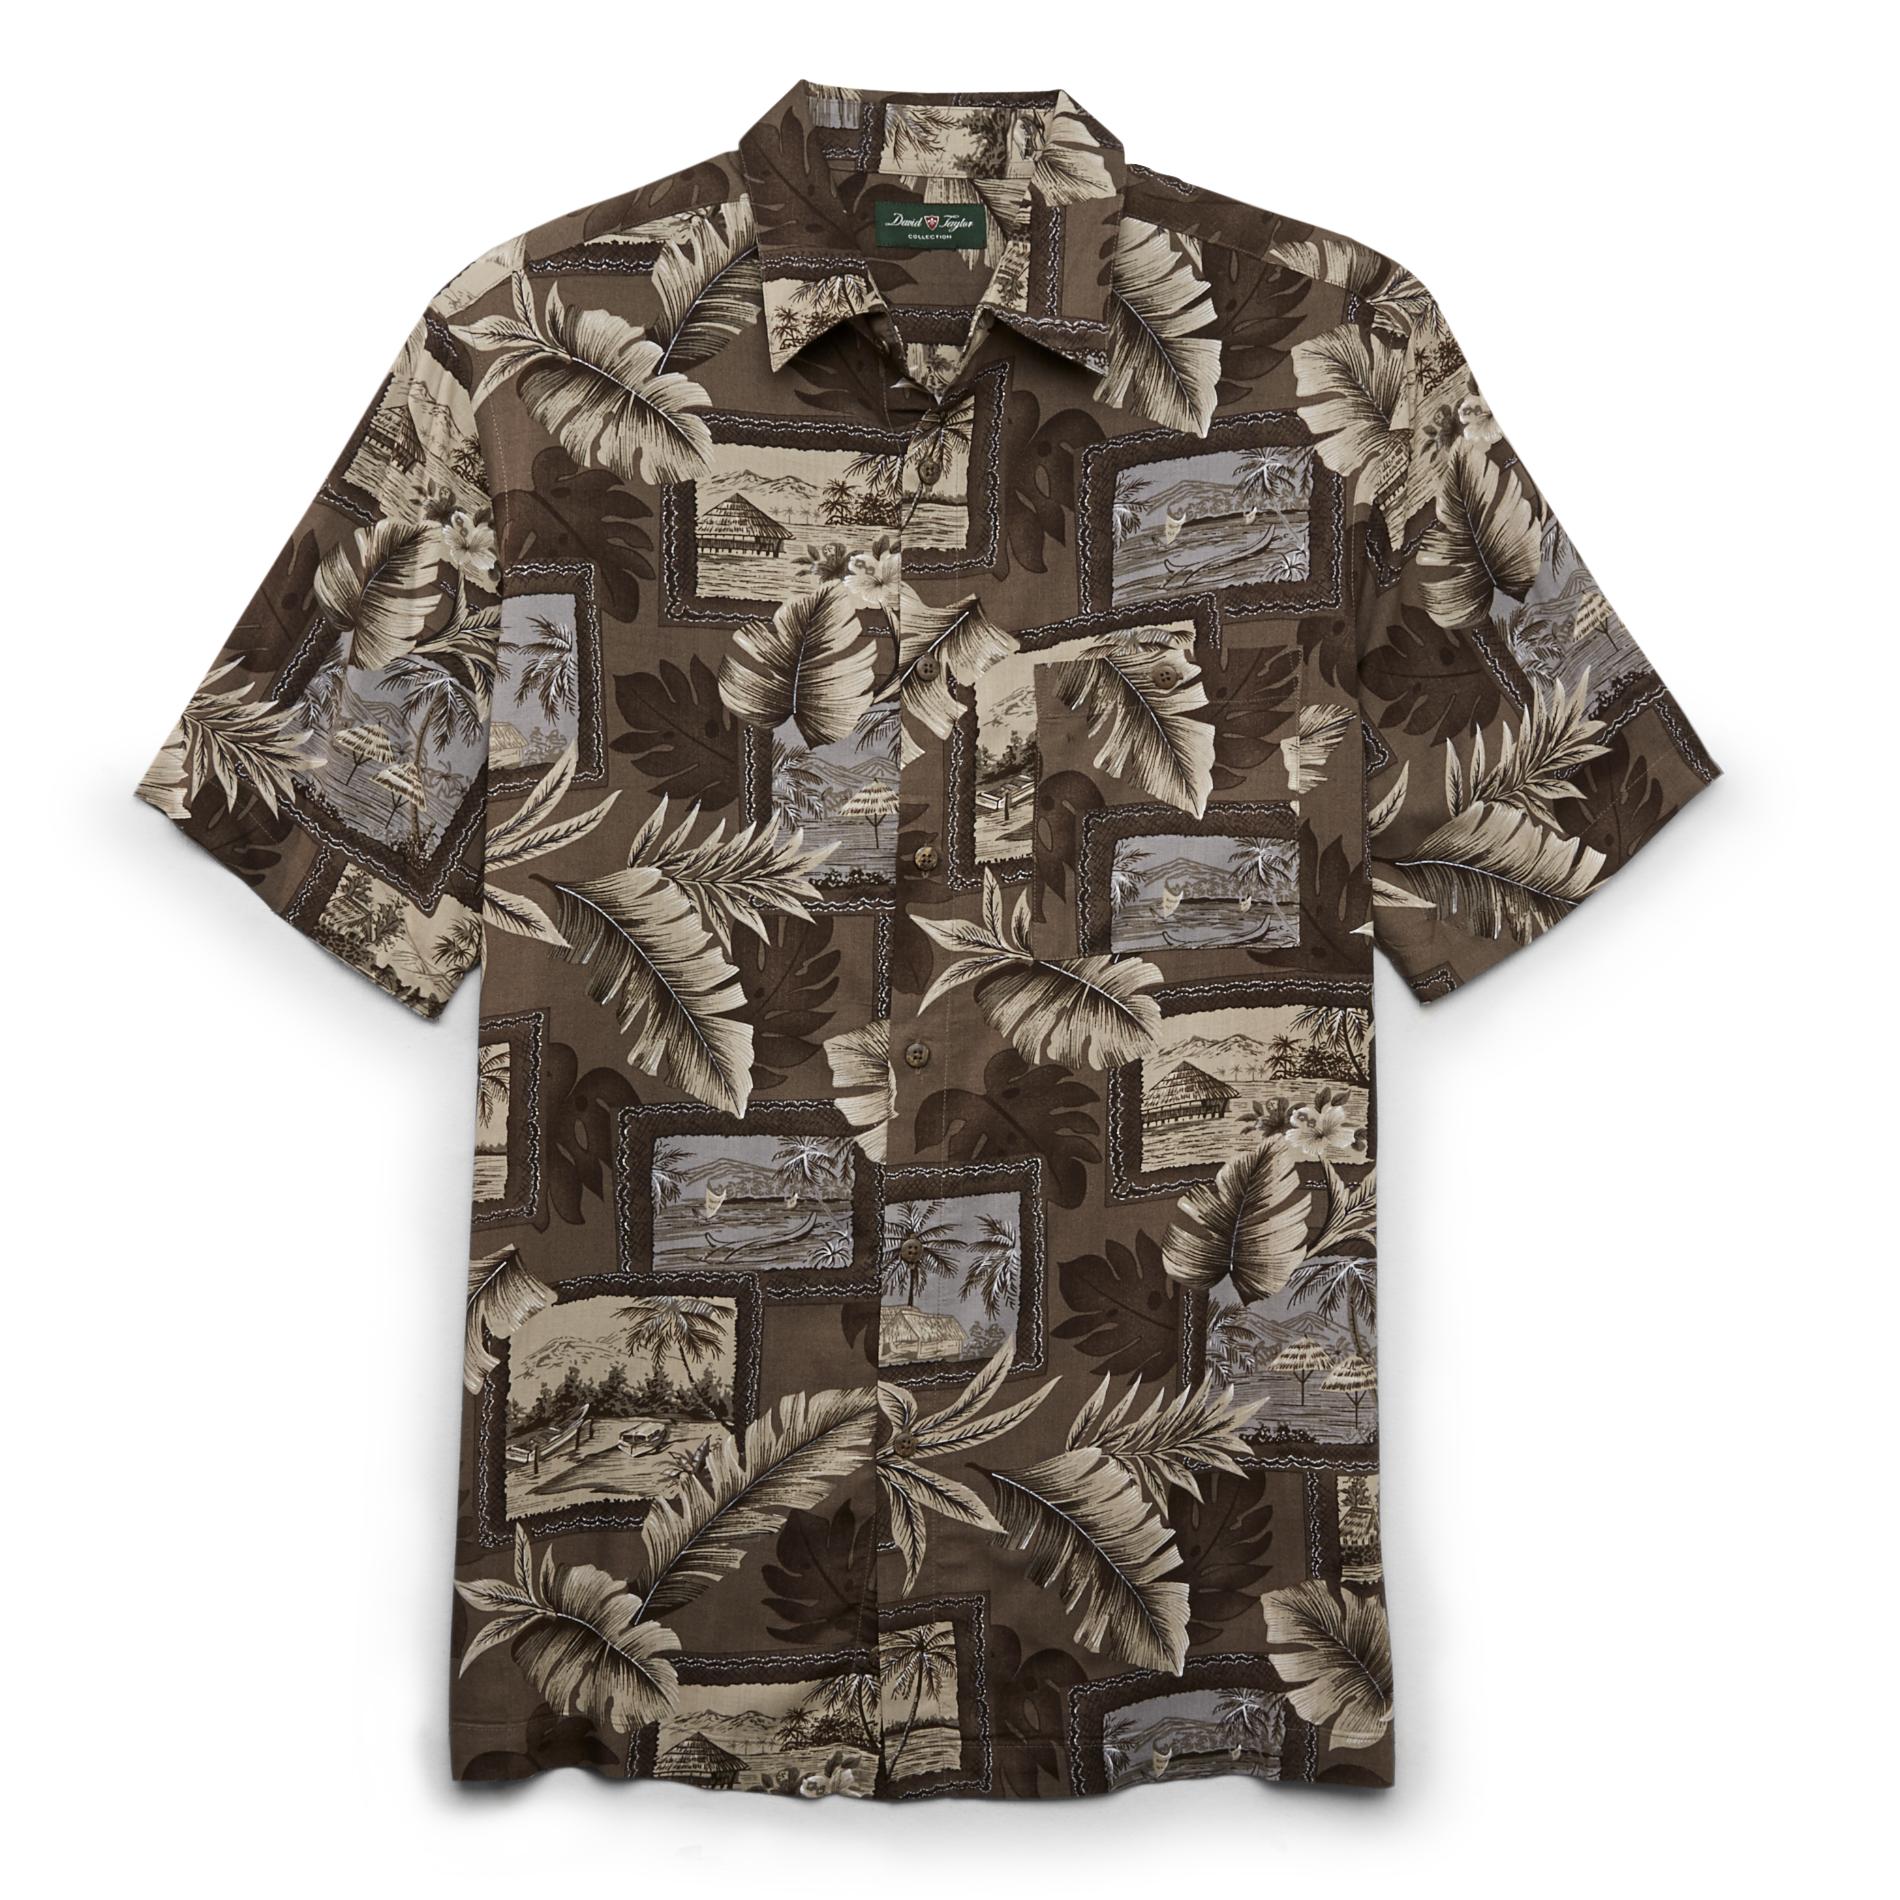 David Taylor Collection Men's Short-Sleeve Button-Front Shirt - Beaches